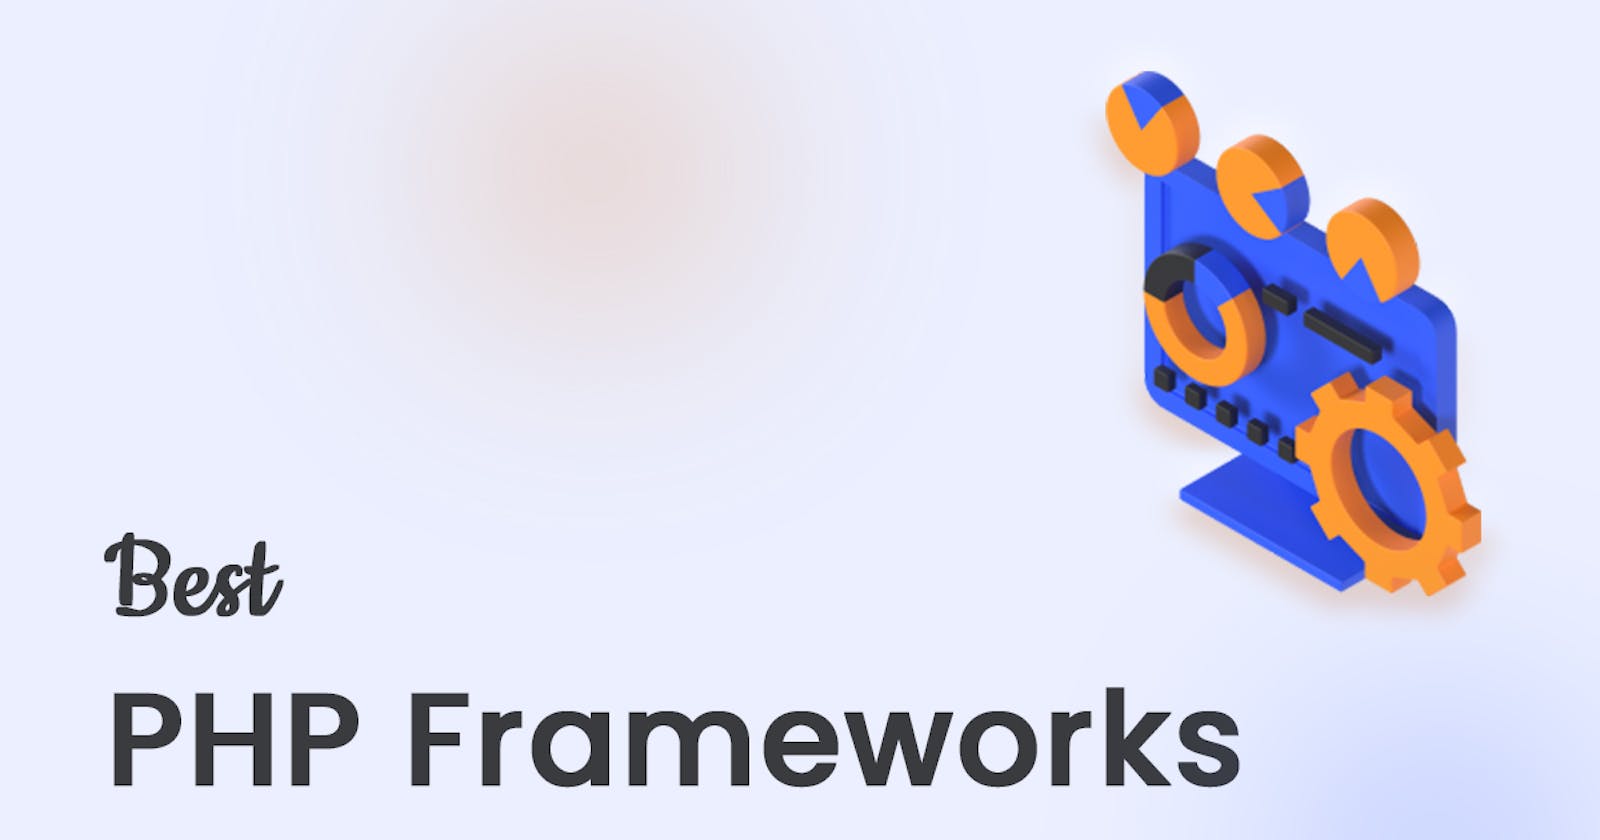 Best PHP Frameworks in 2022